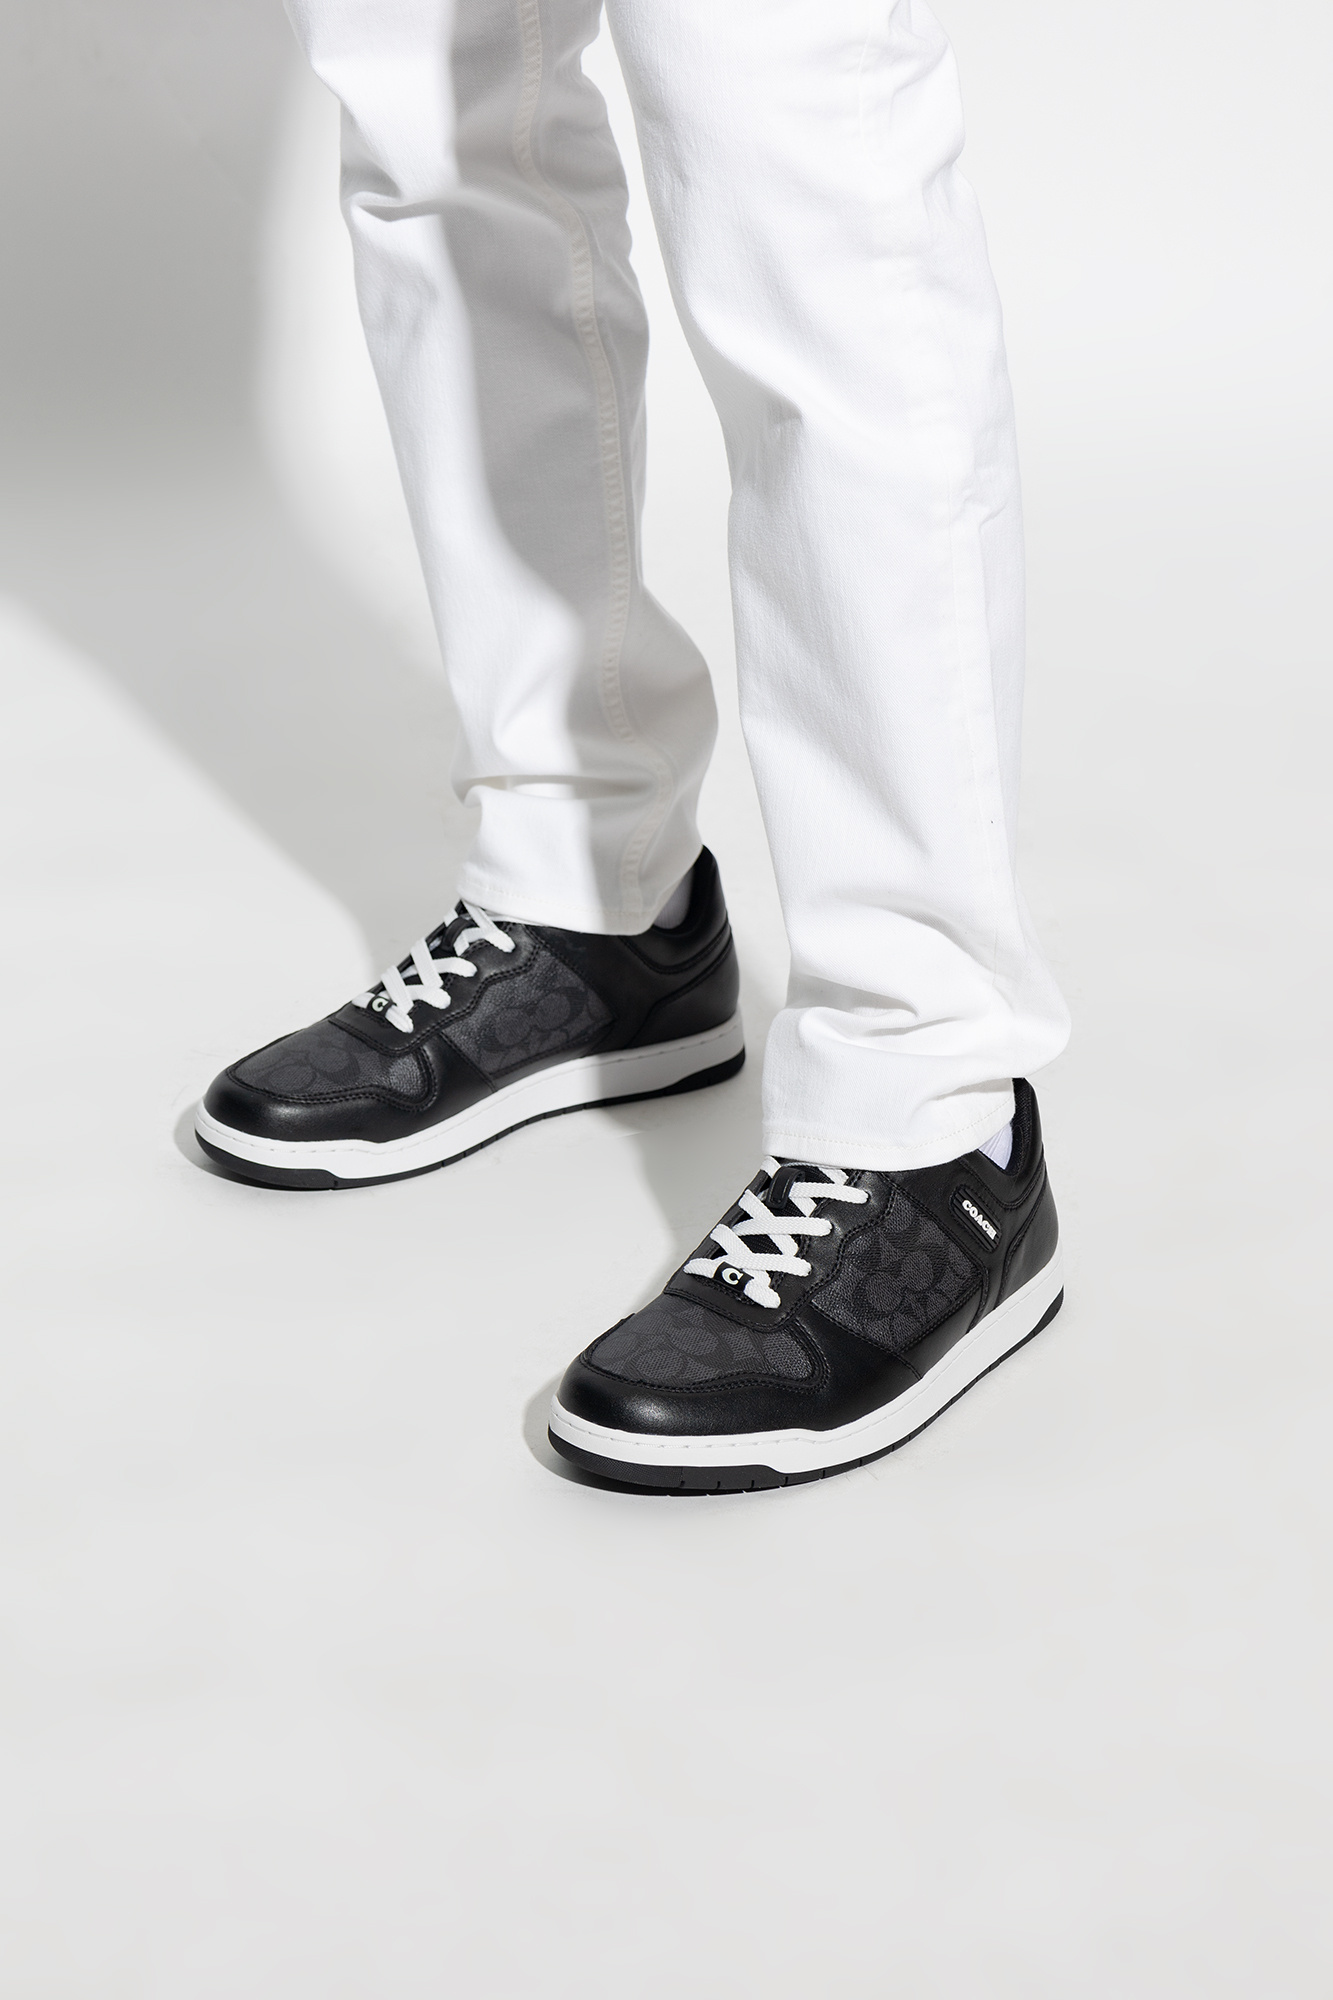 coach tabby leather top handle bag item - Black 'C201' sneakers